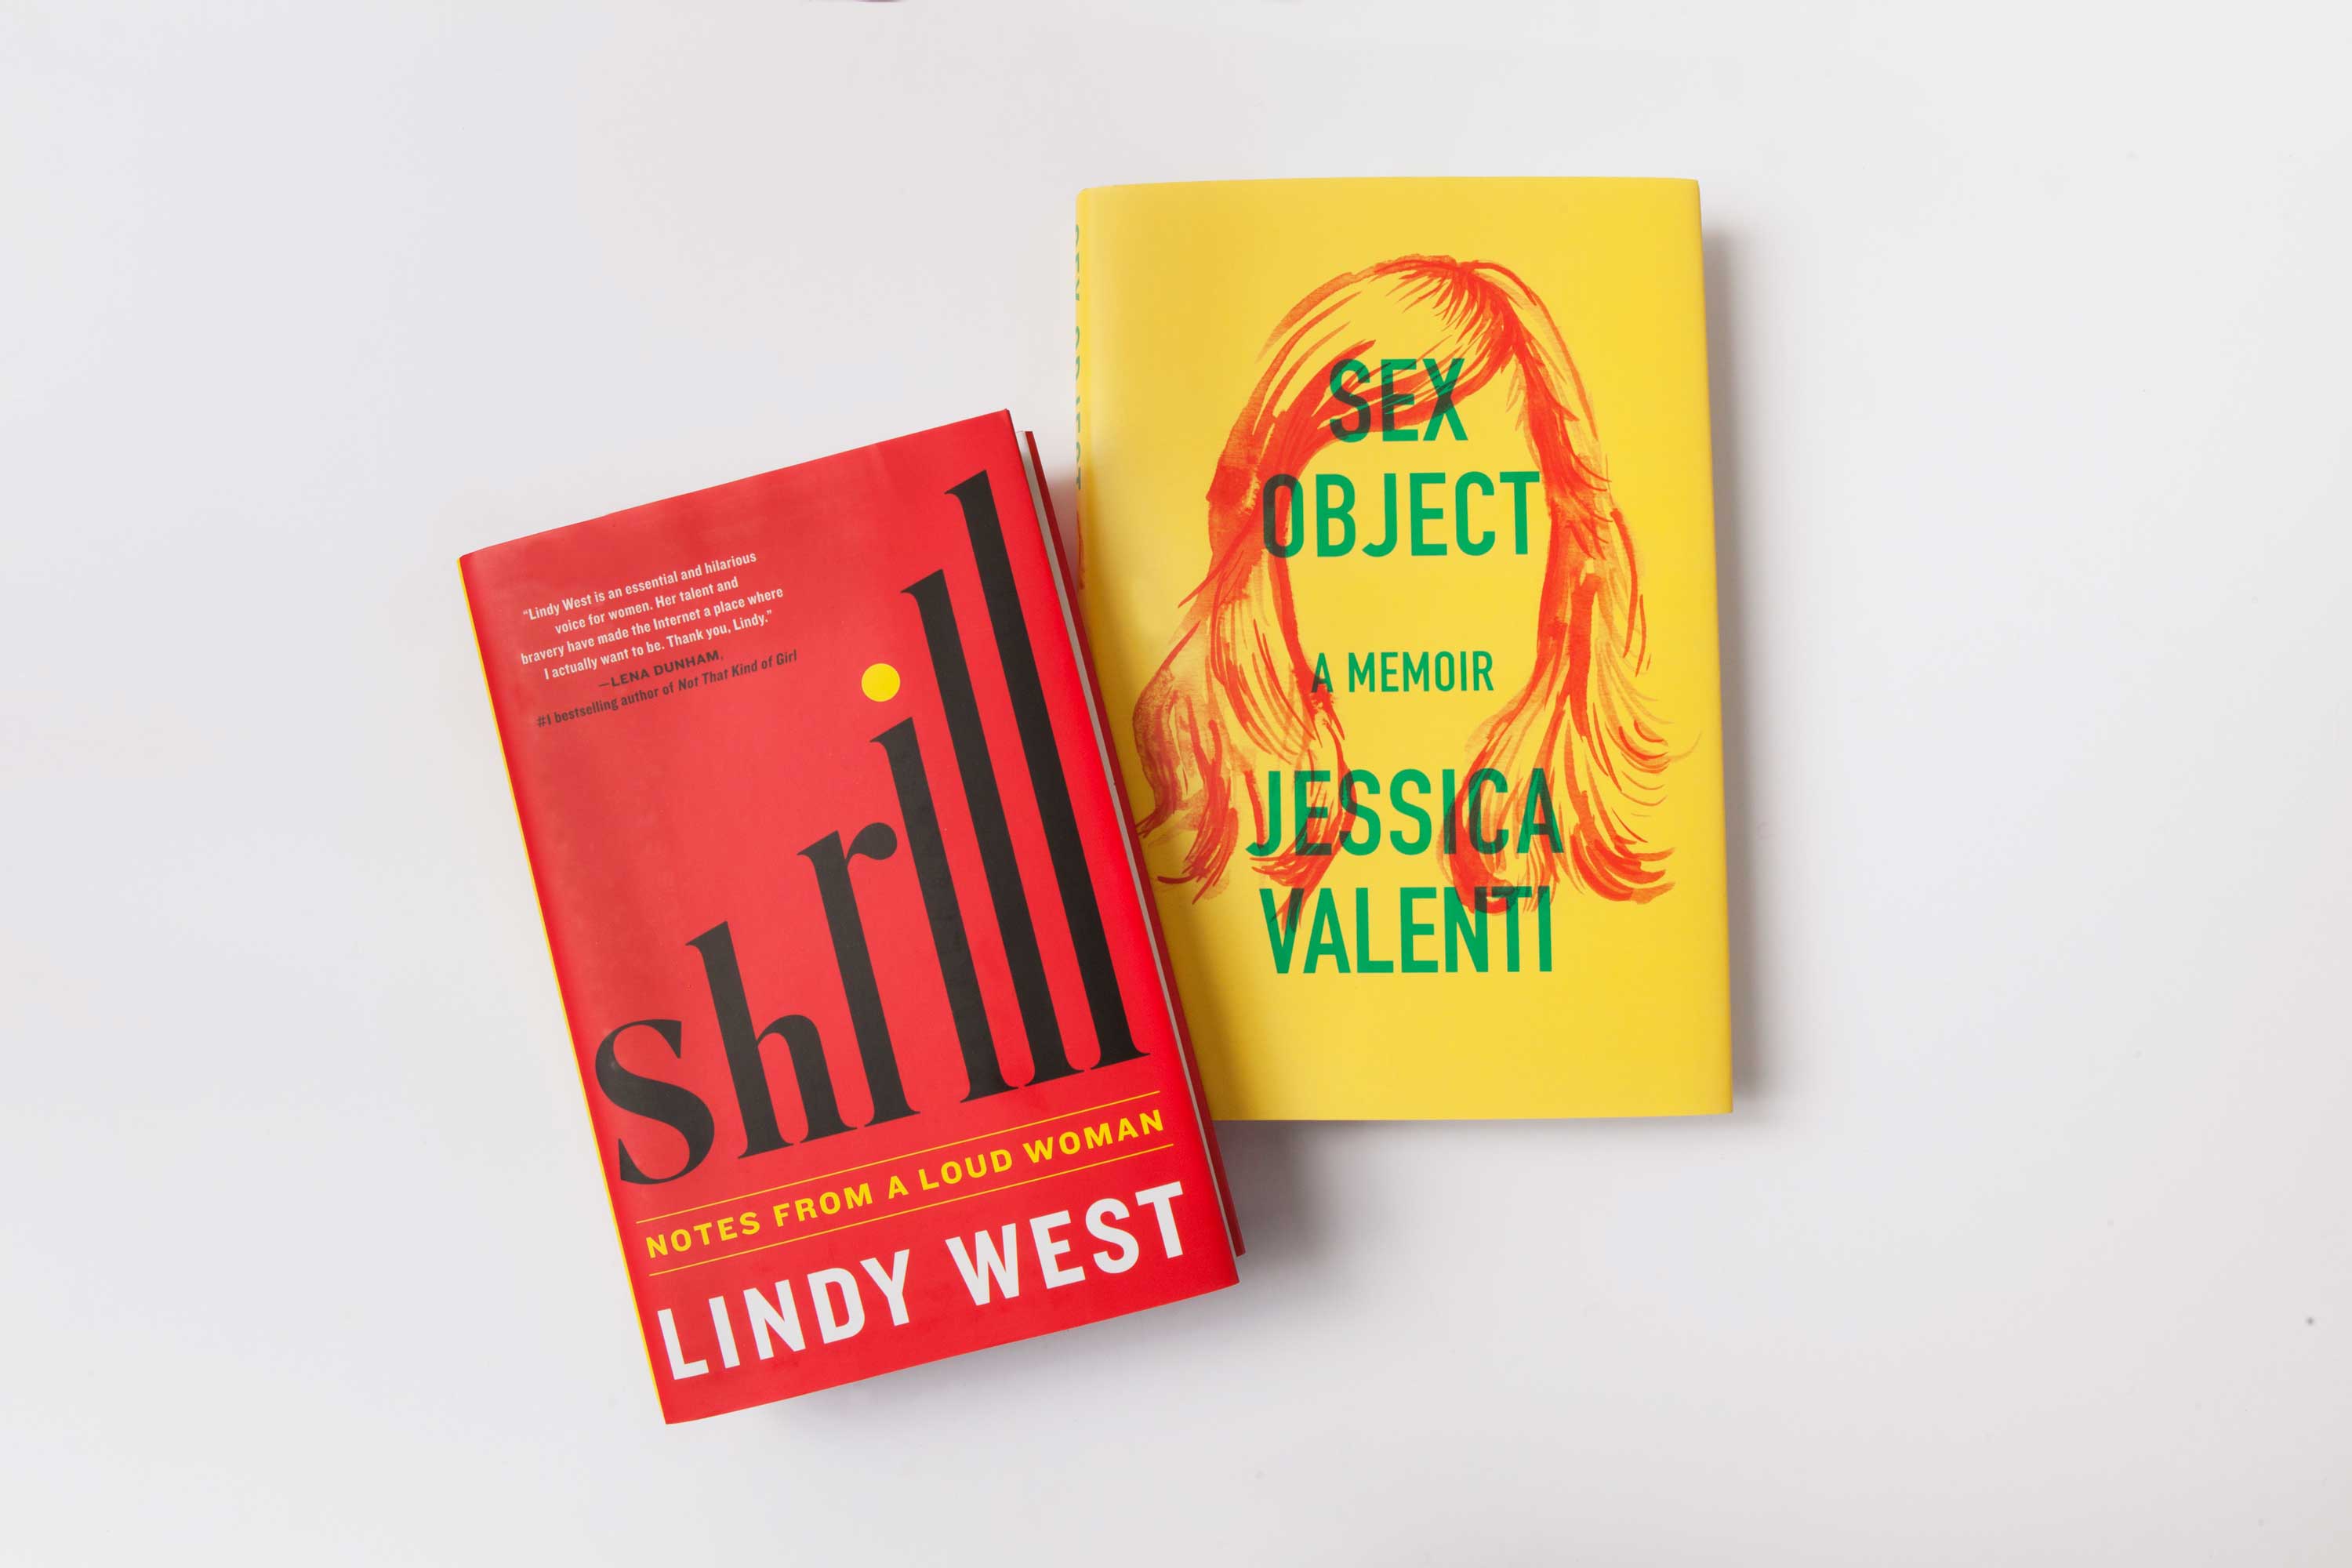 memoirs-lindy-west-shrill-sex-object-jessica-valenti-books-feminism